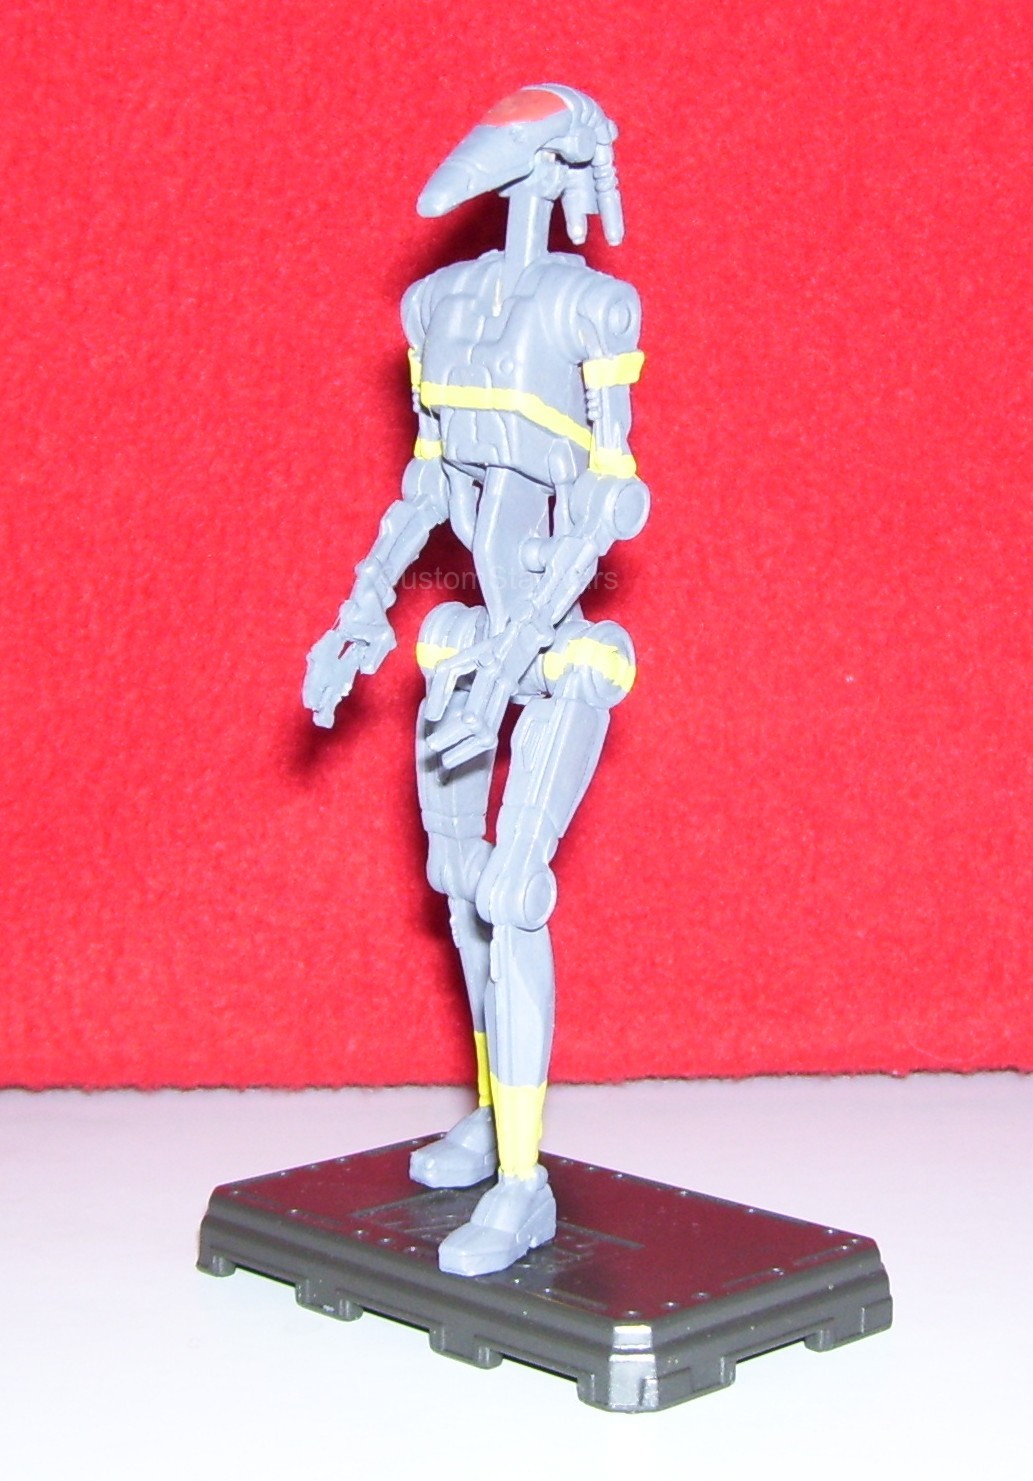 custom firefighter droid figure 3